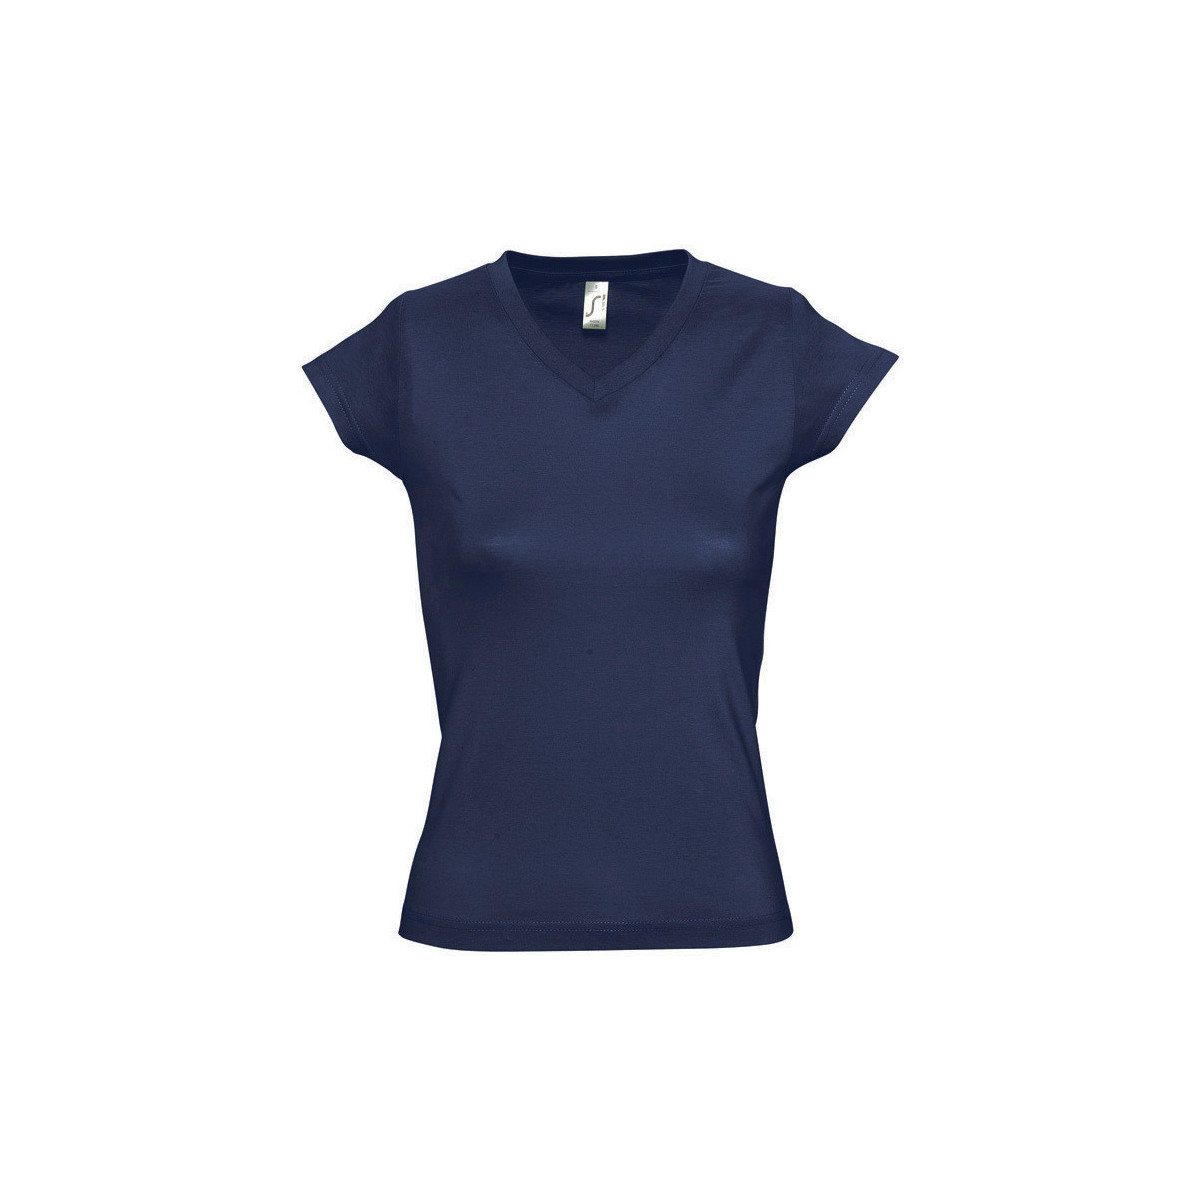 Kleidung Damen T-Shirts Sols MOON COLORS GIRL Blau